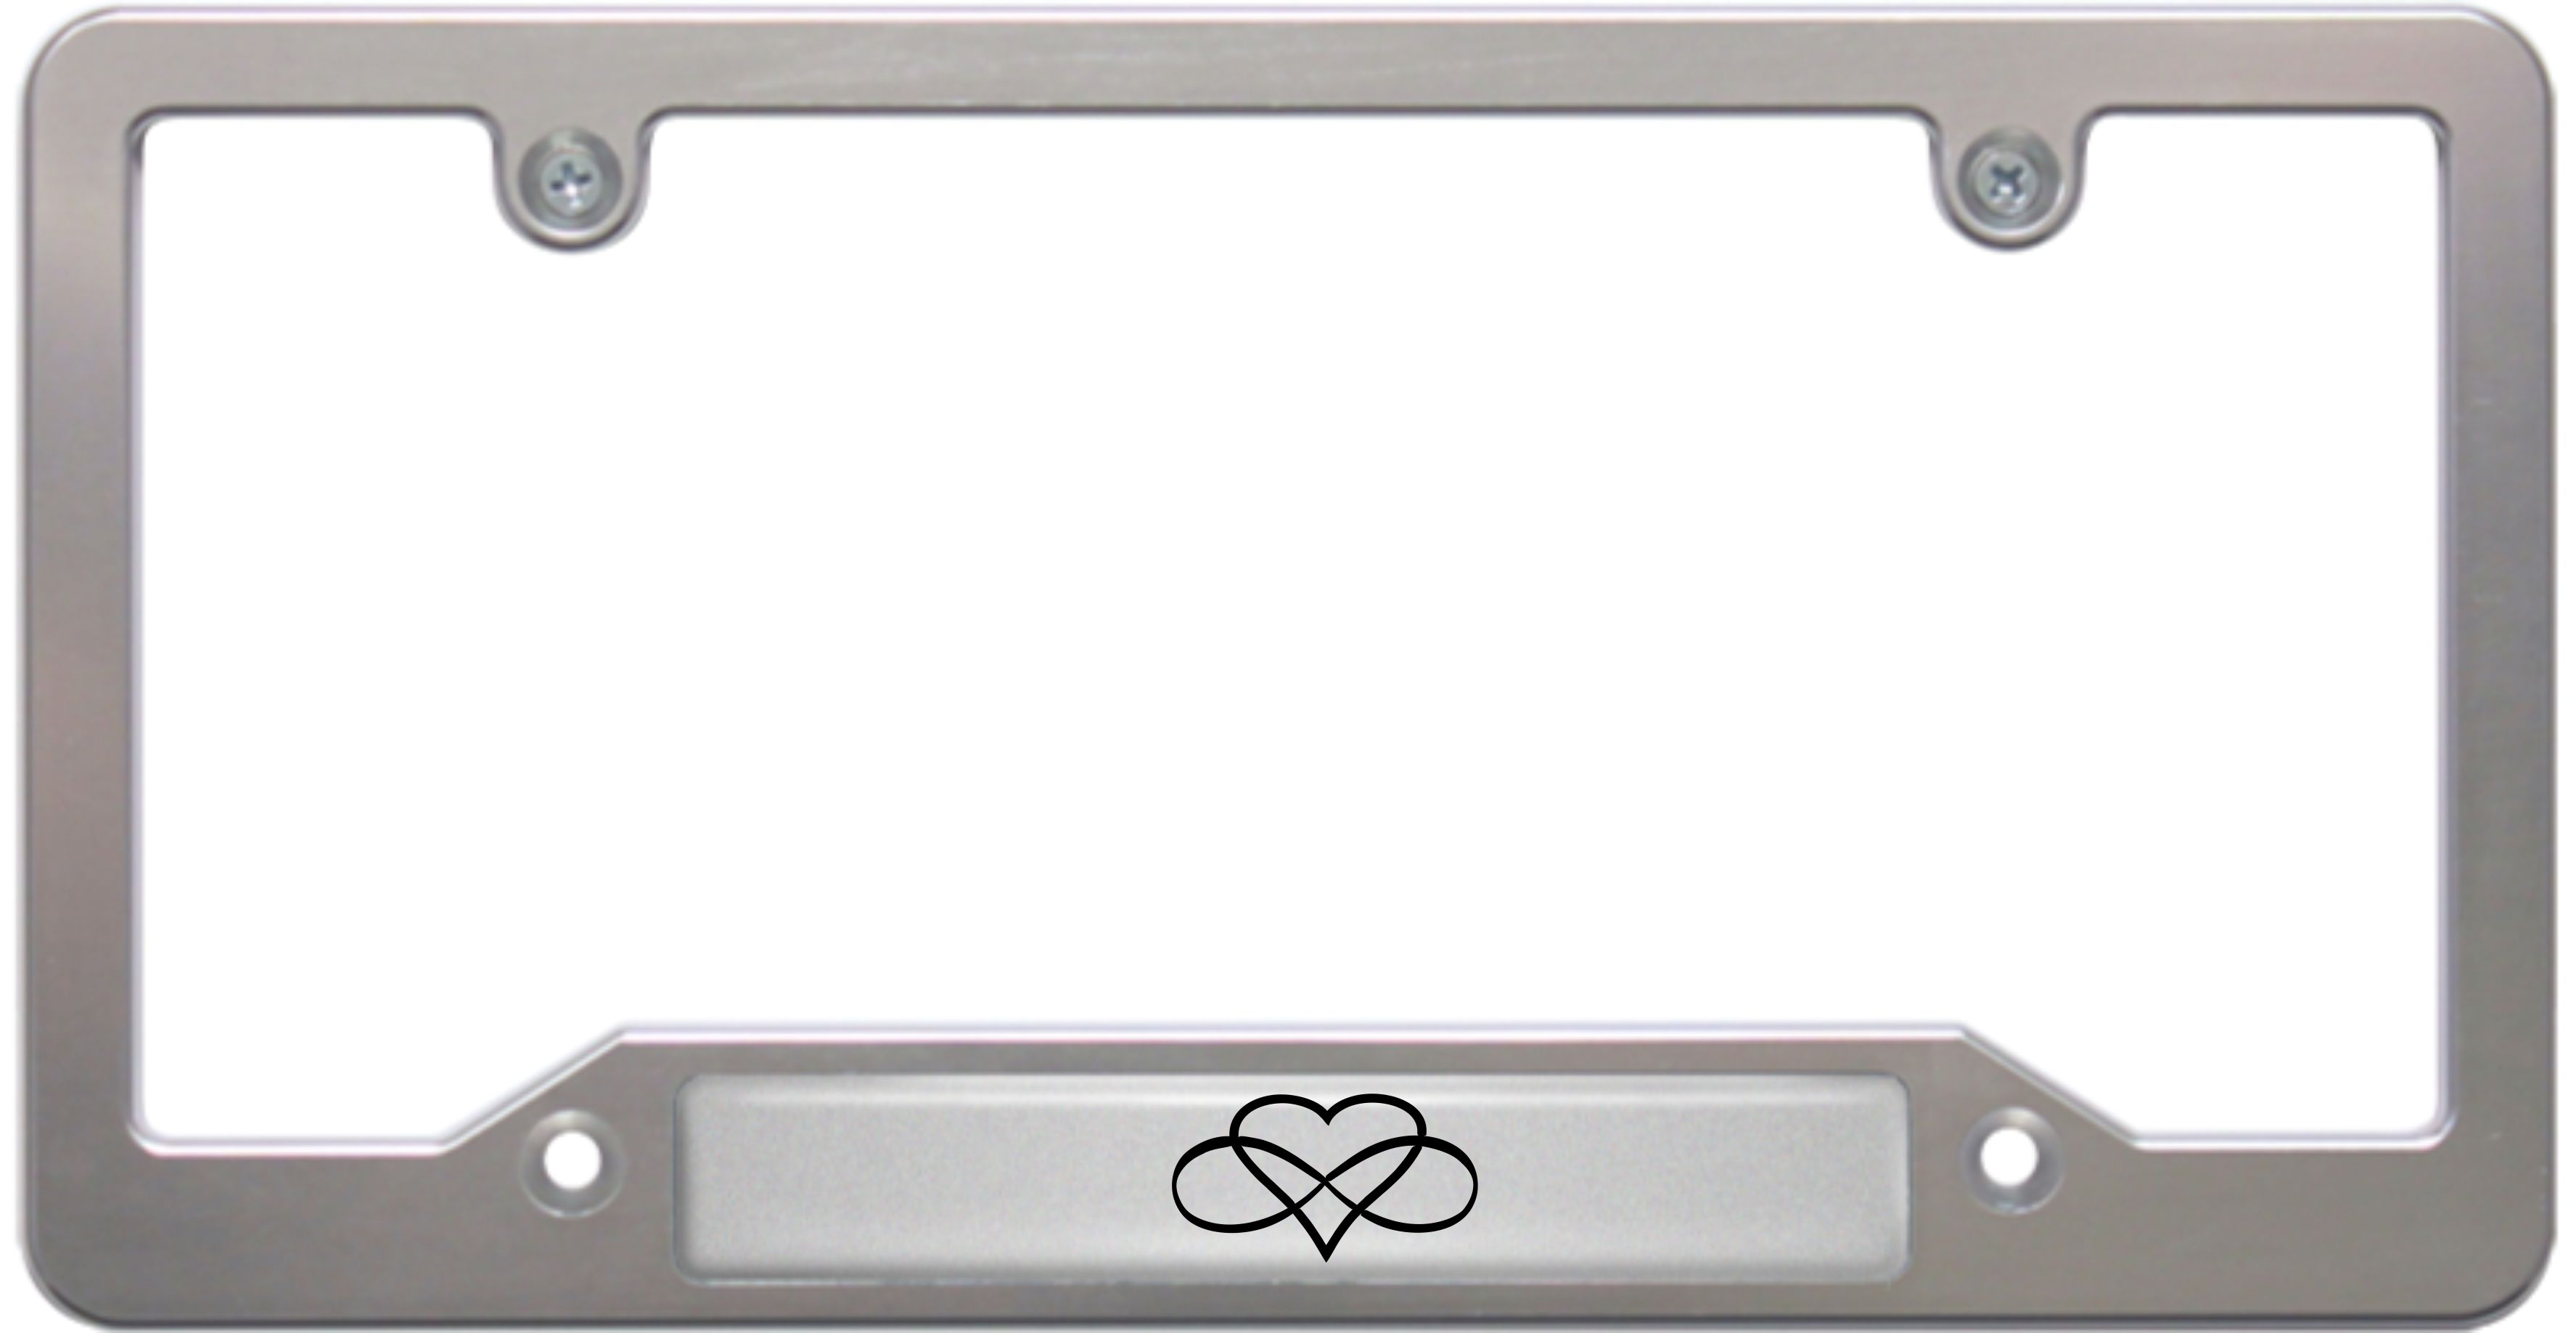 Infinity and Heart custom license plate frame